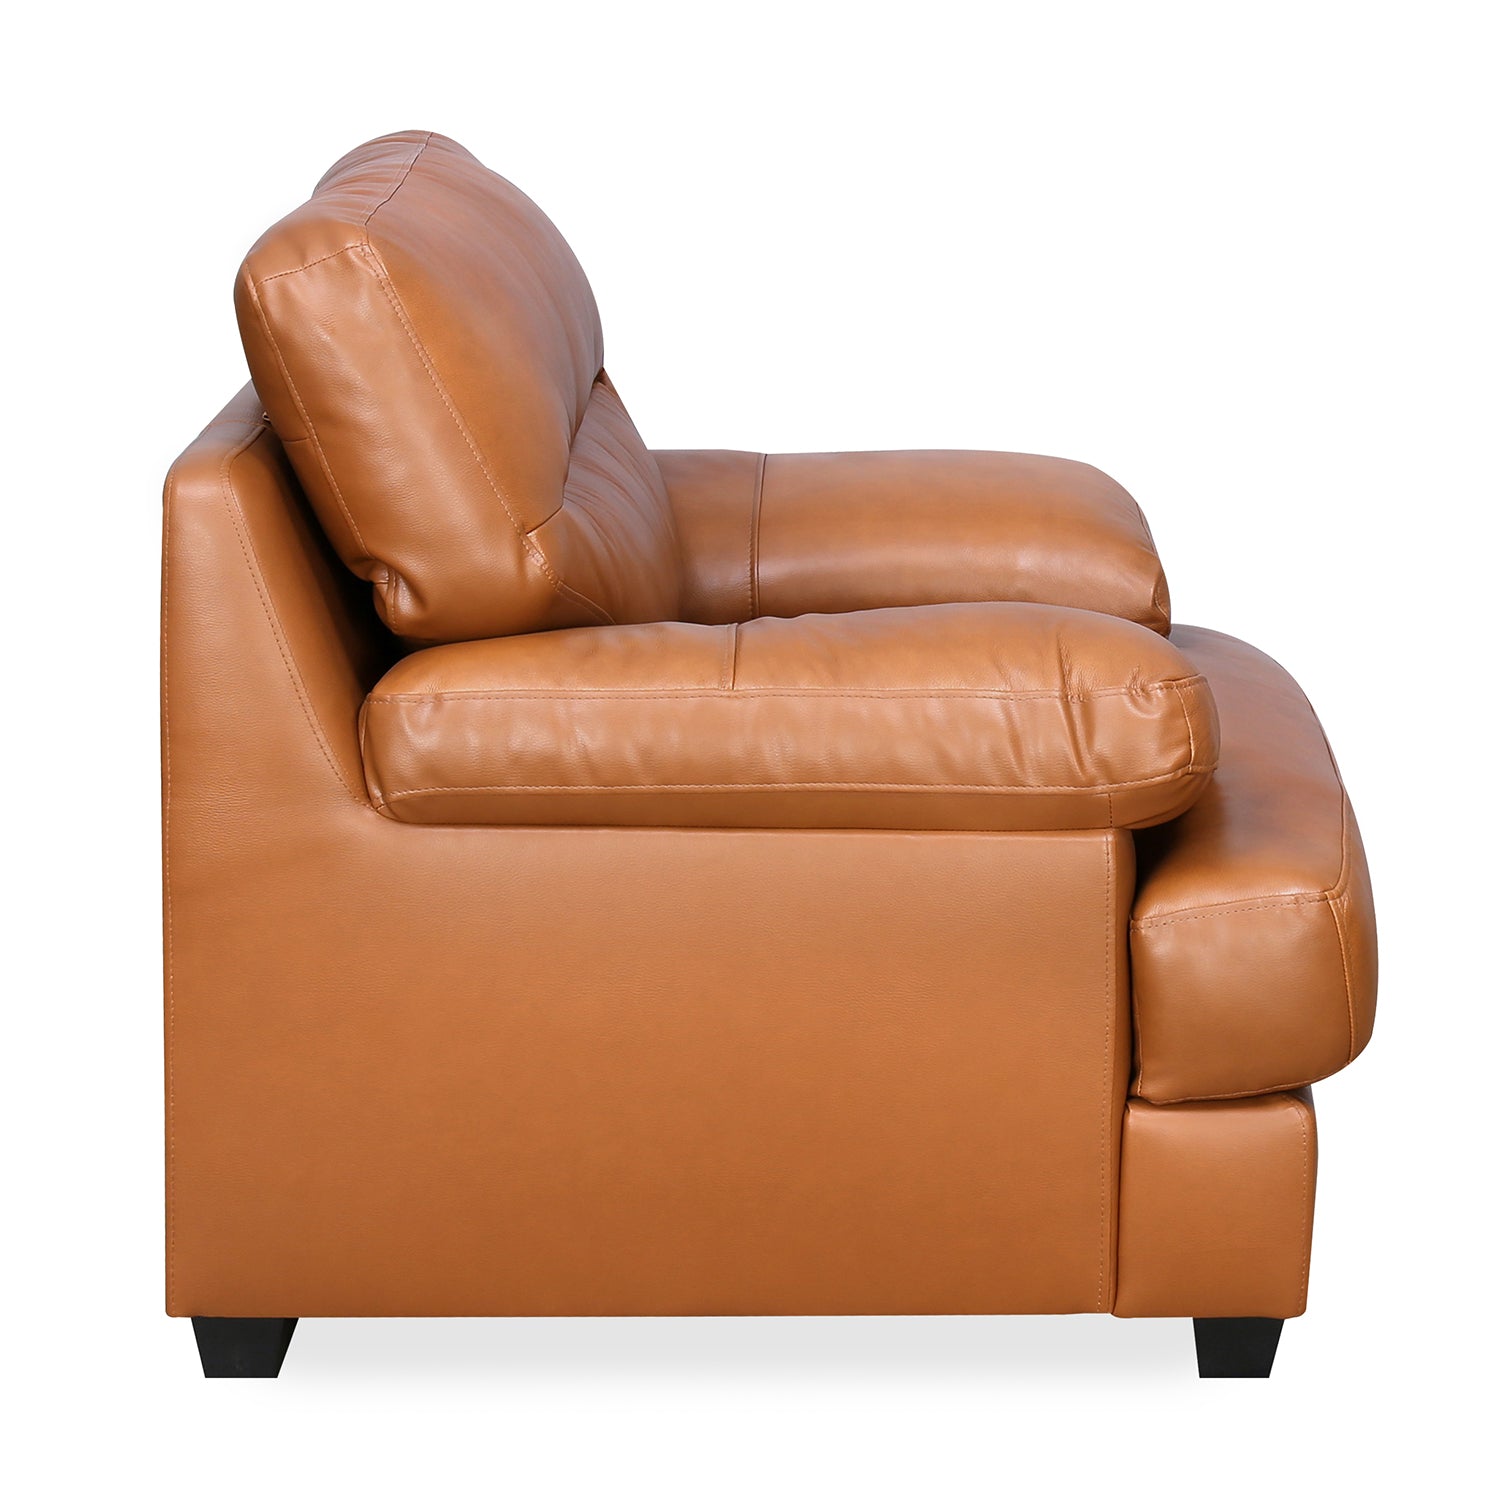 Henders 1 Seater Sofa (Tan)